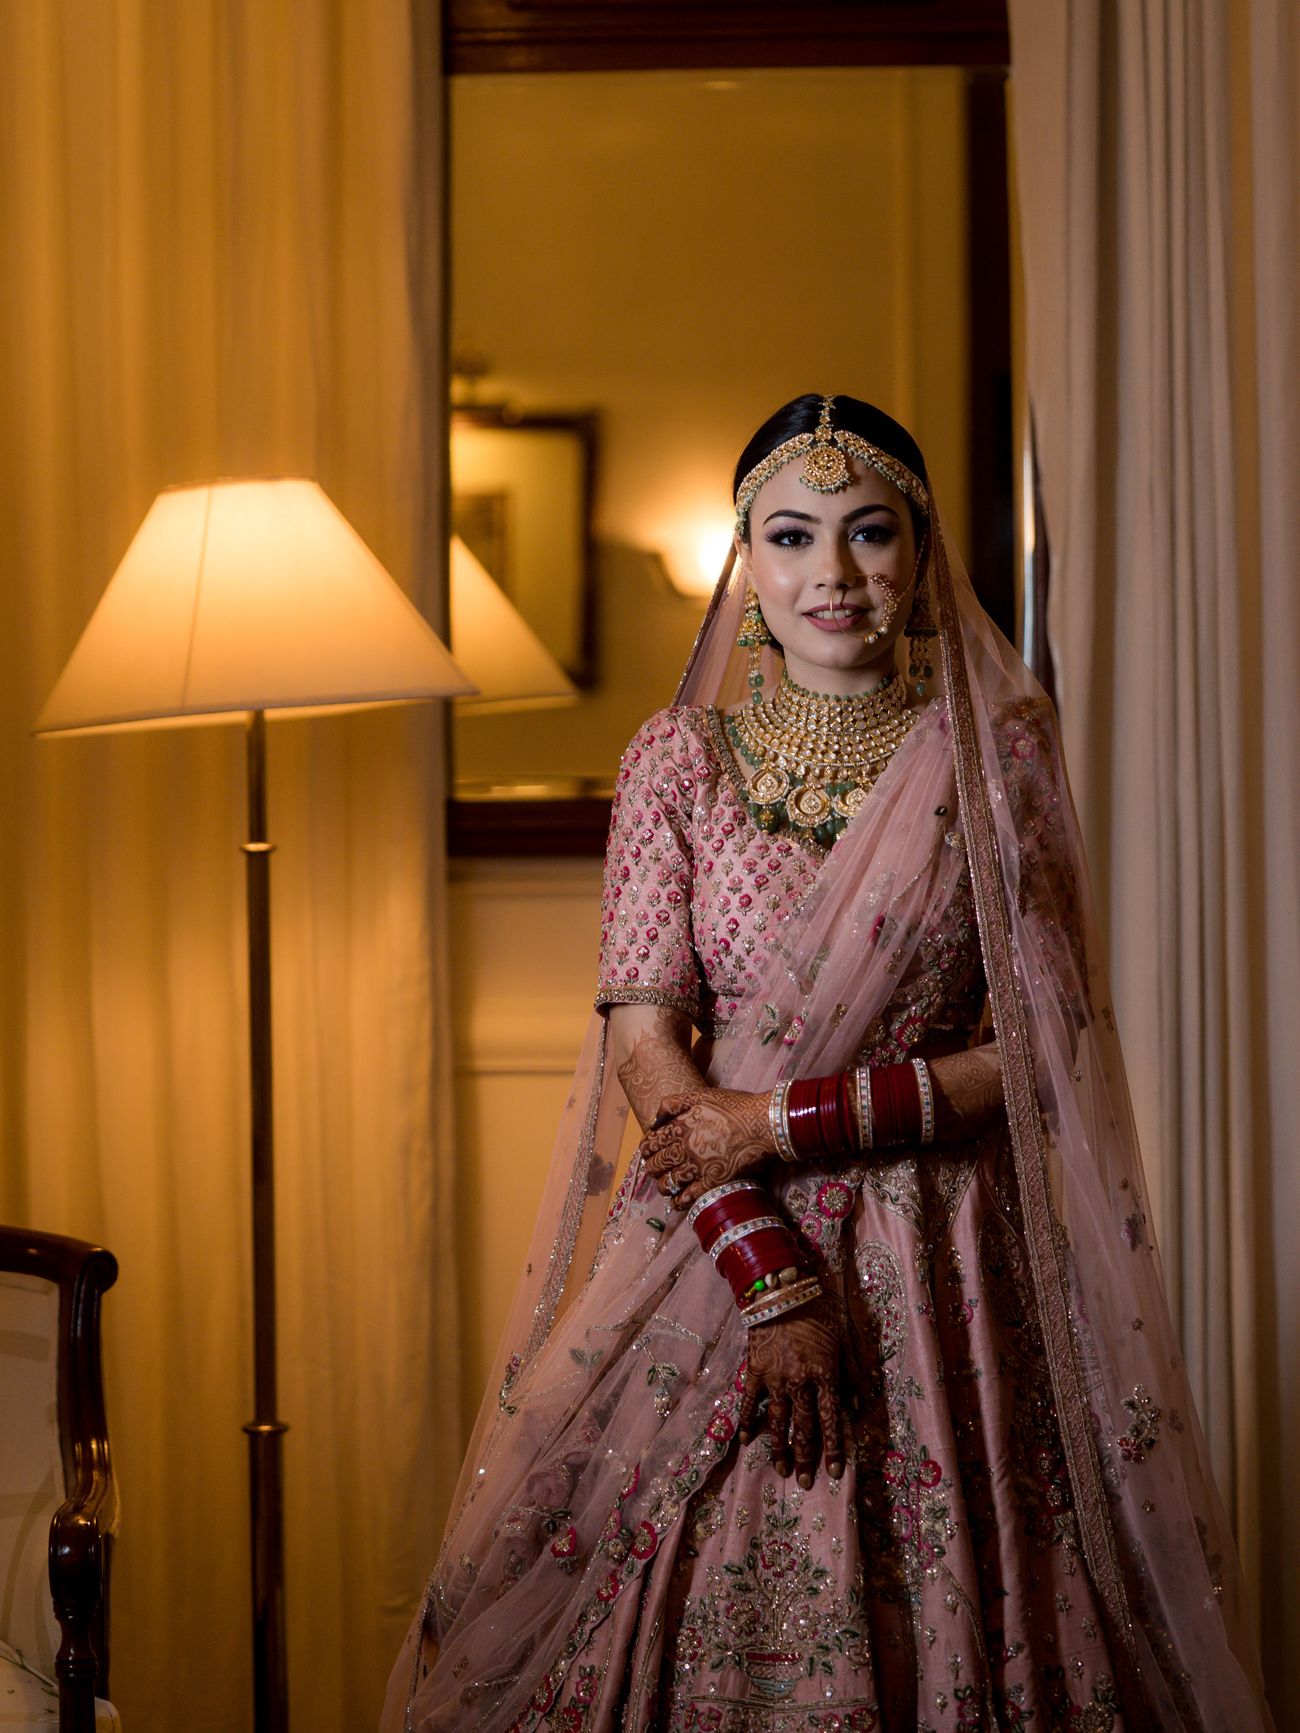 A Gorgeous Delhi Wedding With An Intricate Bridal Lehenga | WedMeGood